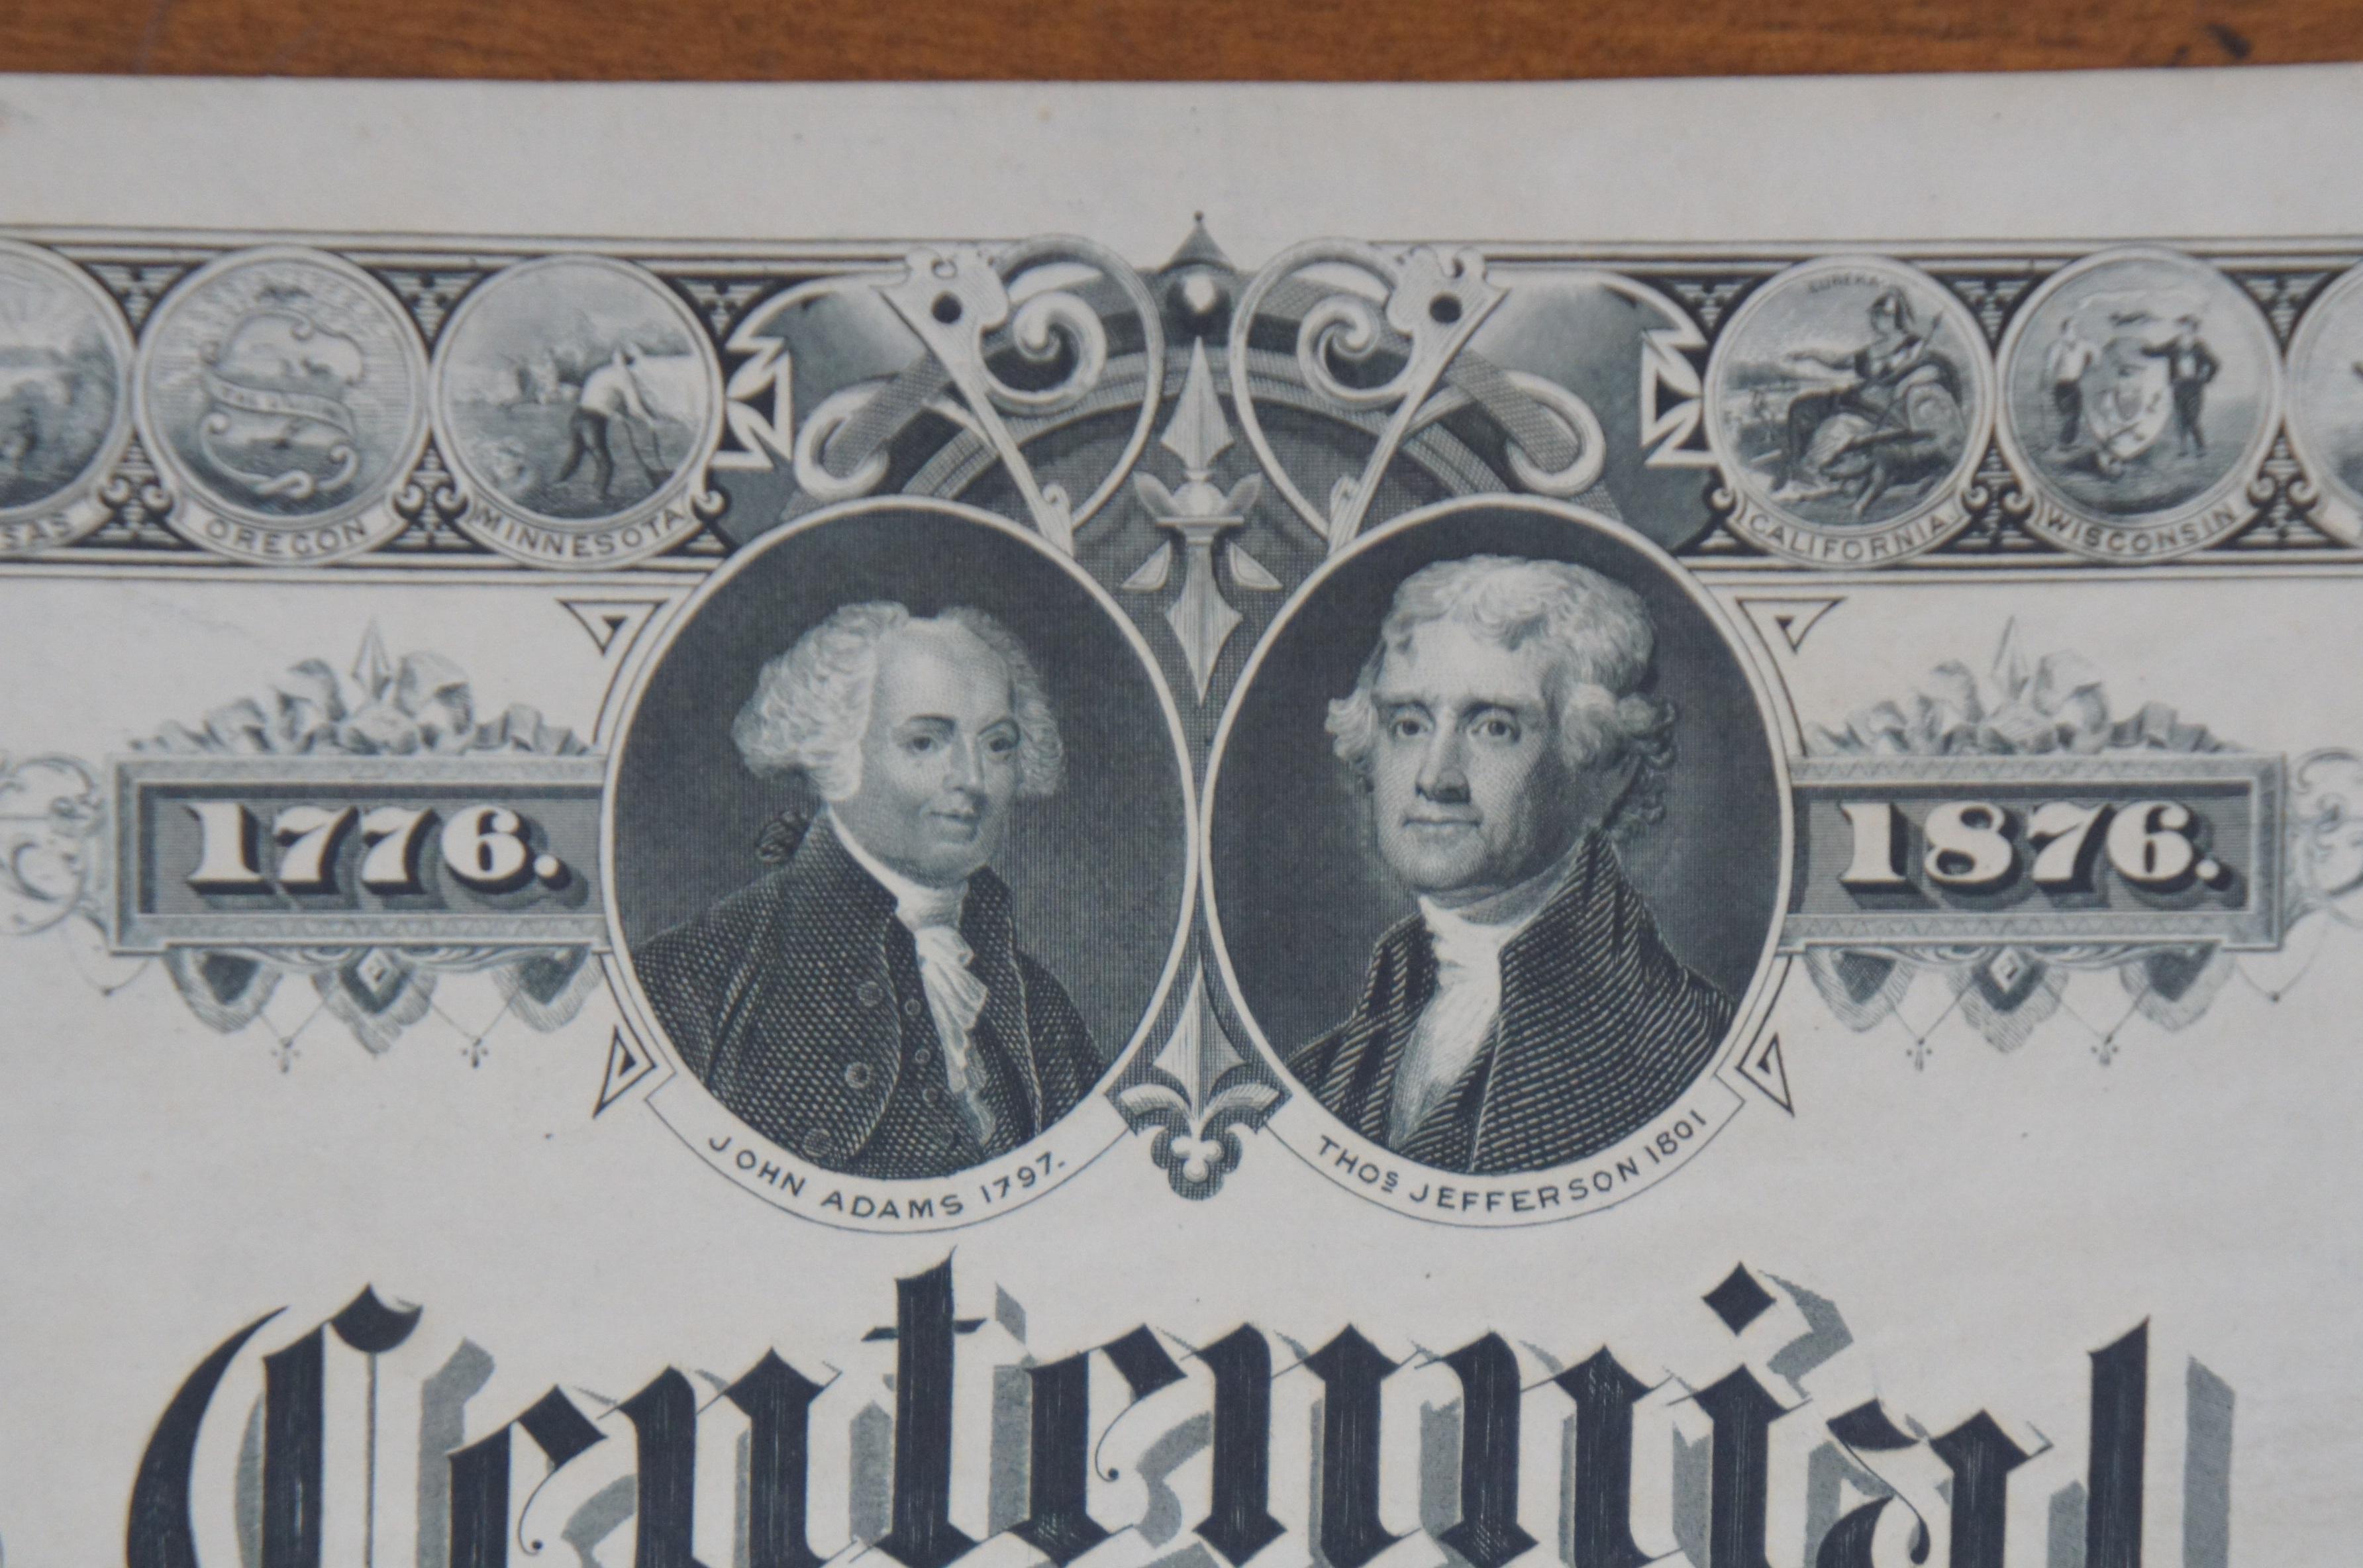 1876 Antique American Centennial Bank Note Engraving 18 Presidents 36 States 1